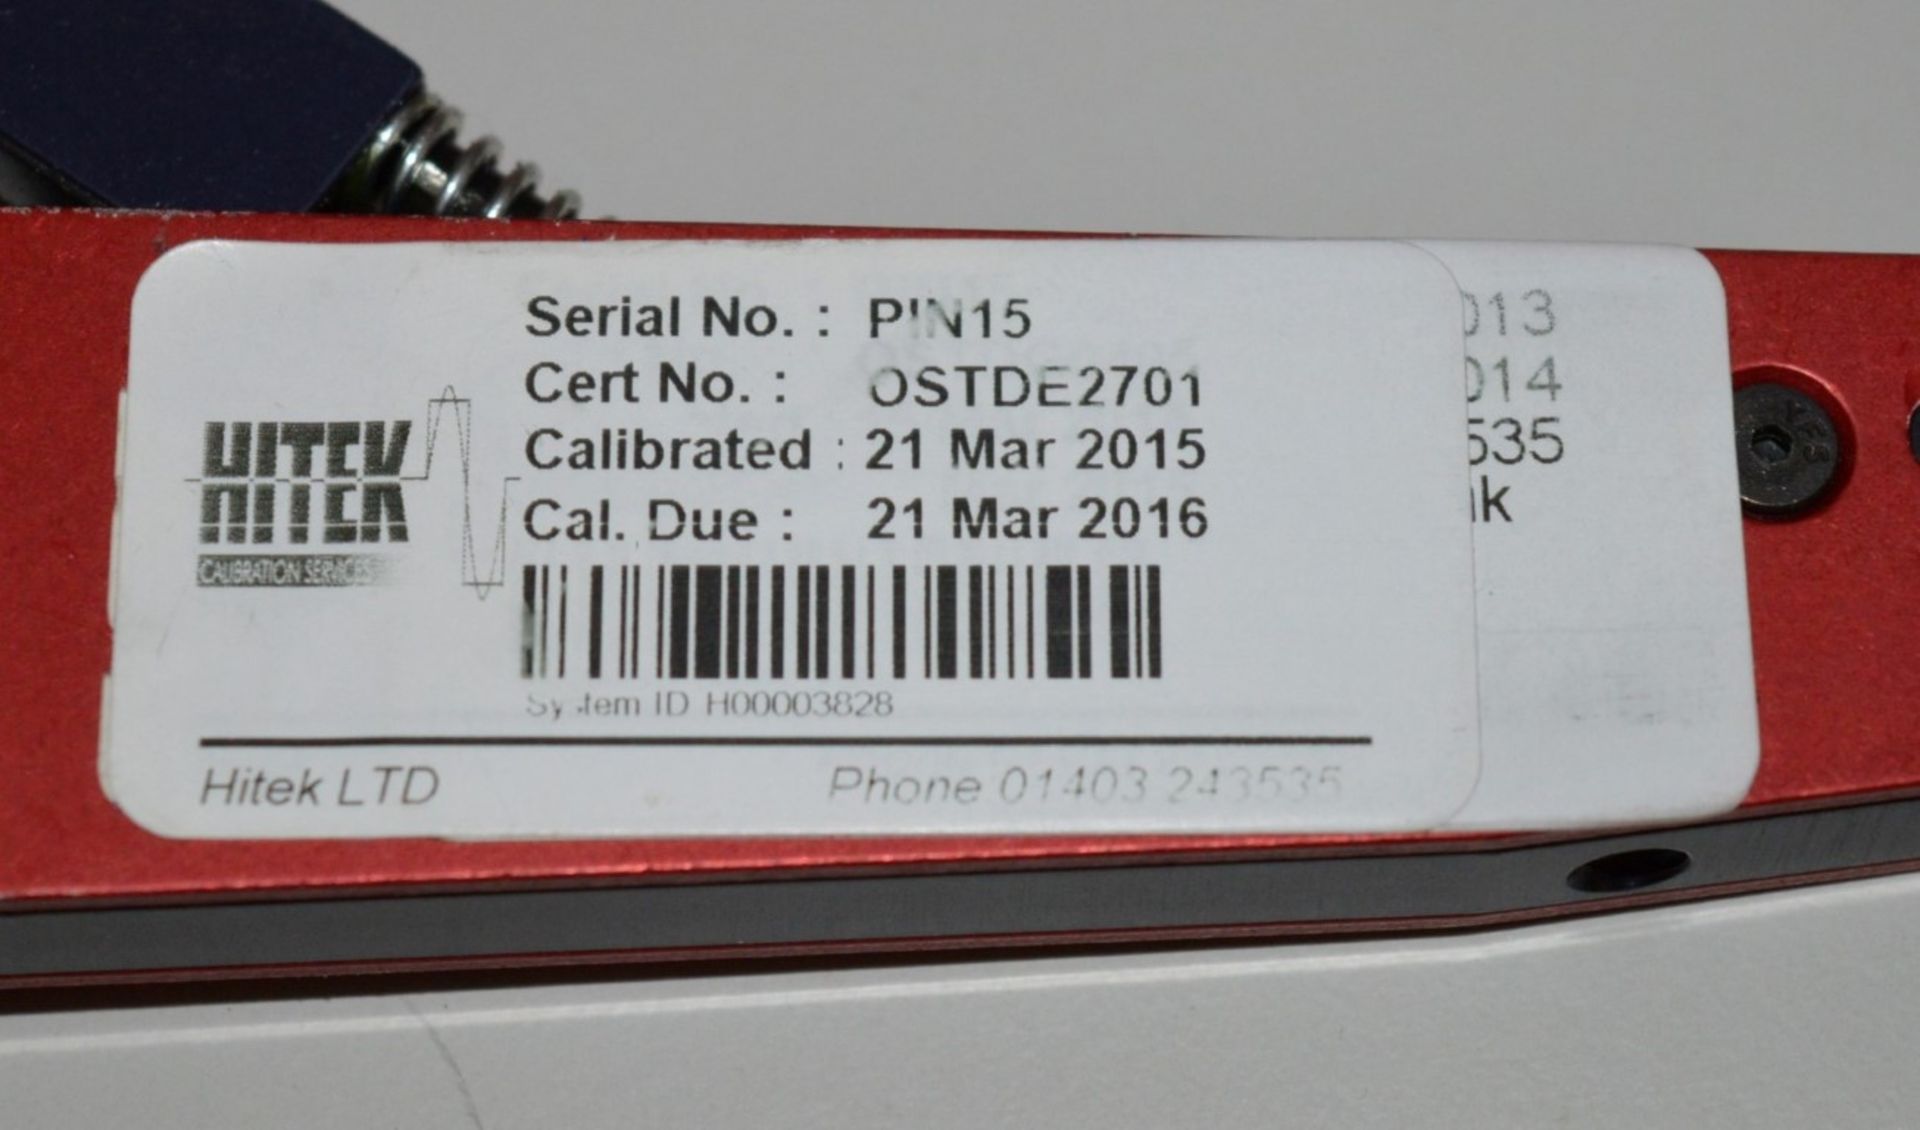 1 x DMC Crimp Tool MH800 (GB109) - Calibarated Until 21st March 2016 - Ultra precision crimp tool - Image 6 of 10